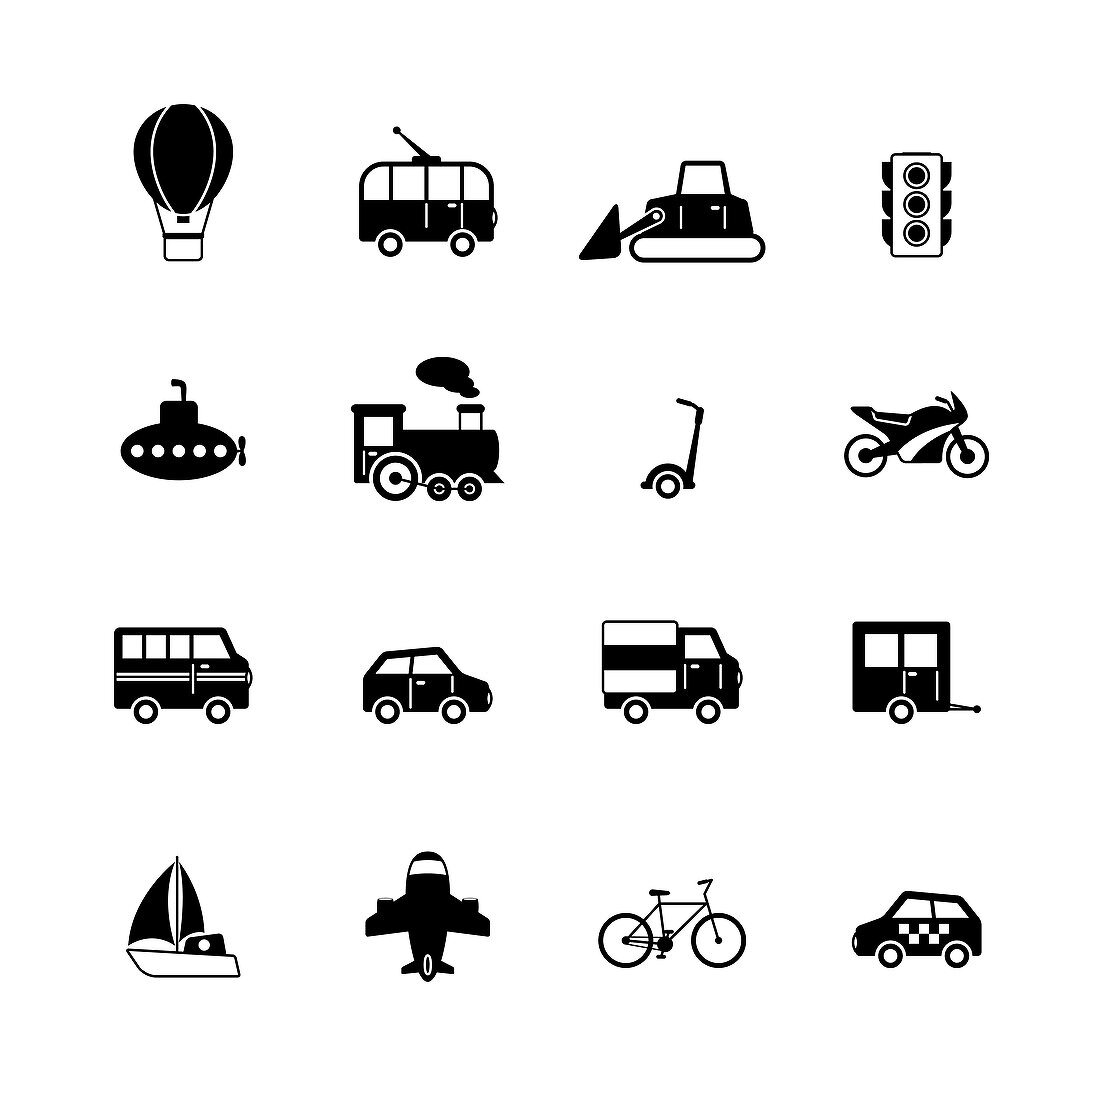 Transport icons, illustration